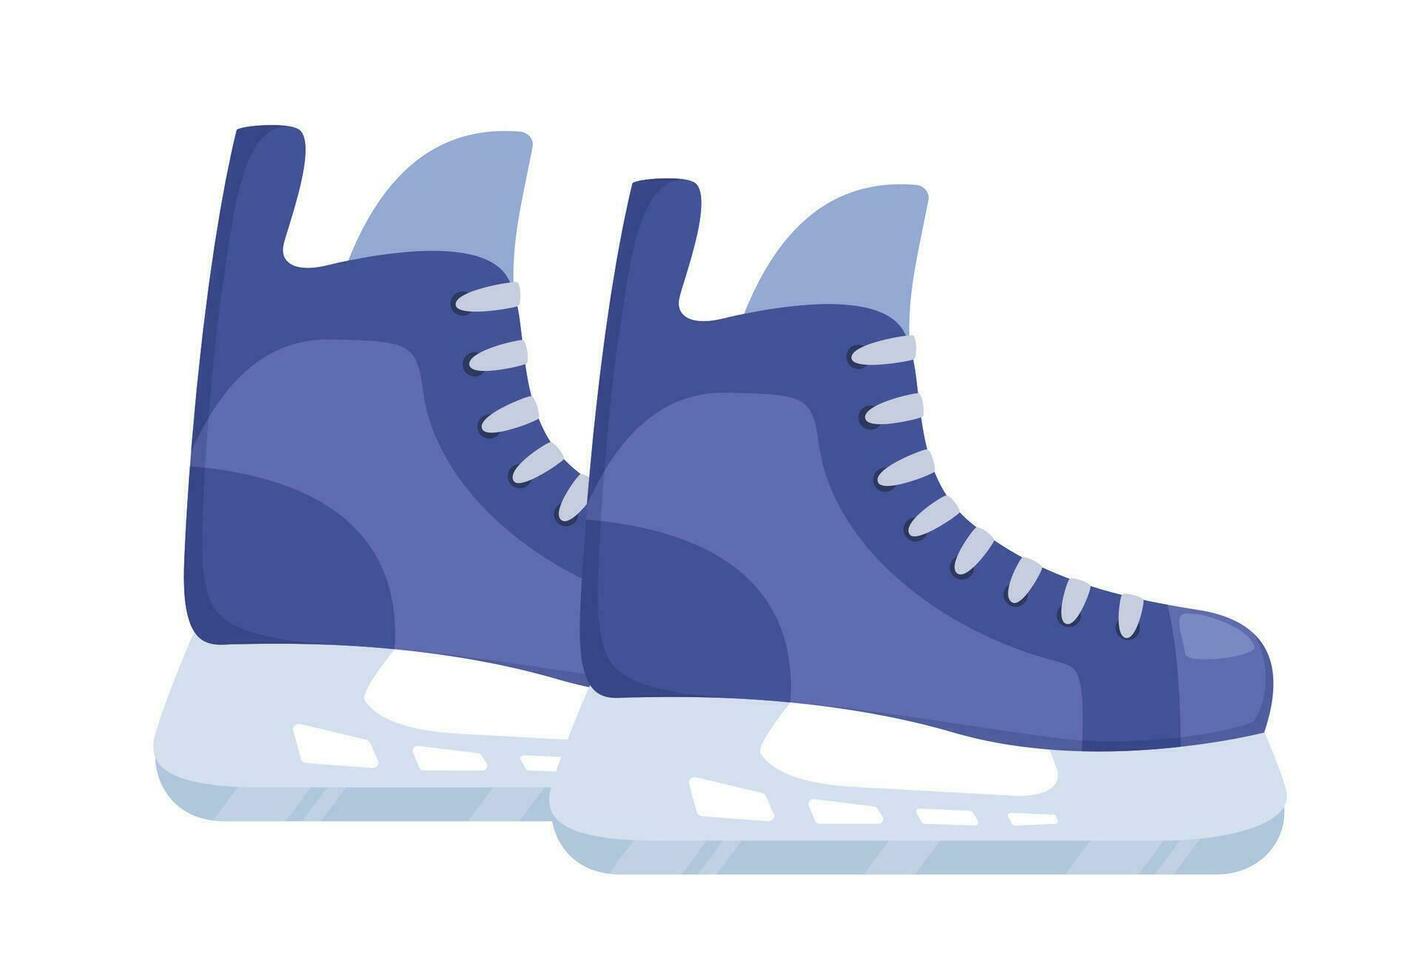 Ice skates for playing hockey. Hockey equipment. Vector illustration of men's skates.